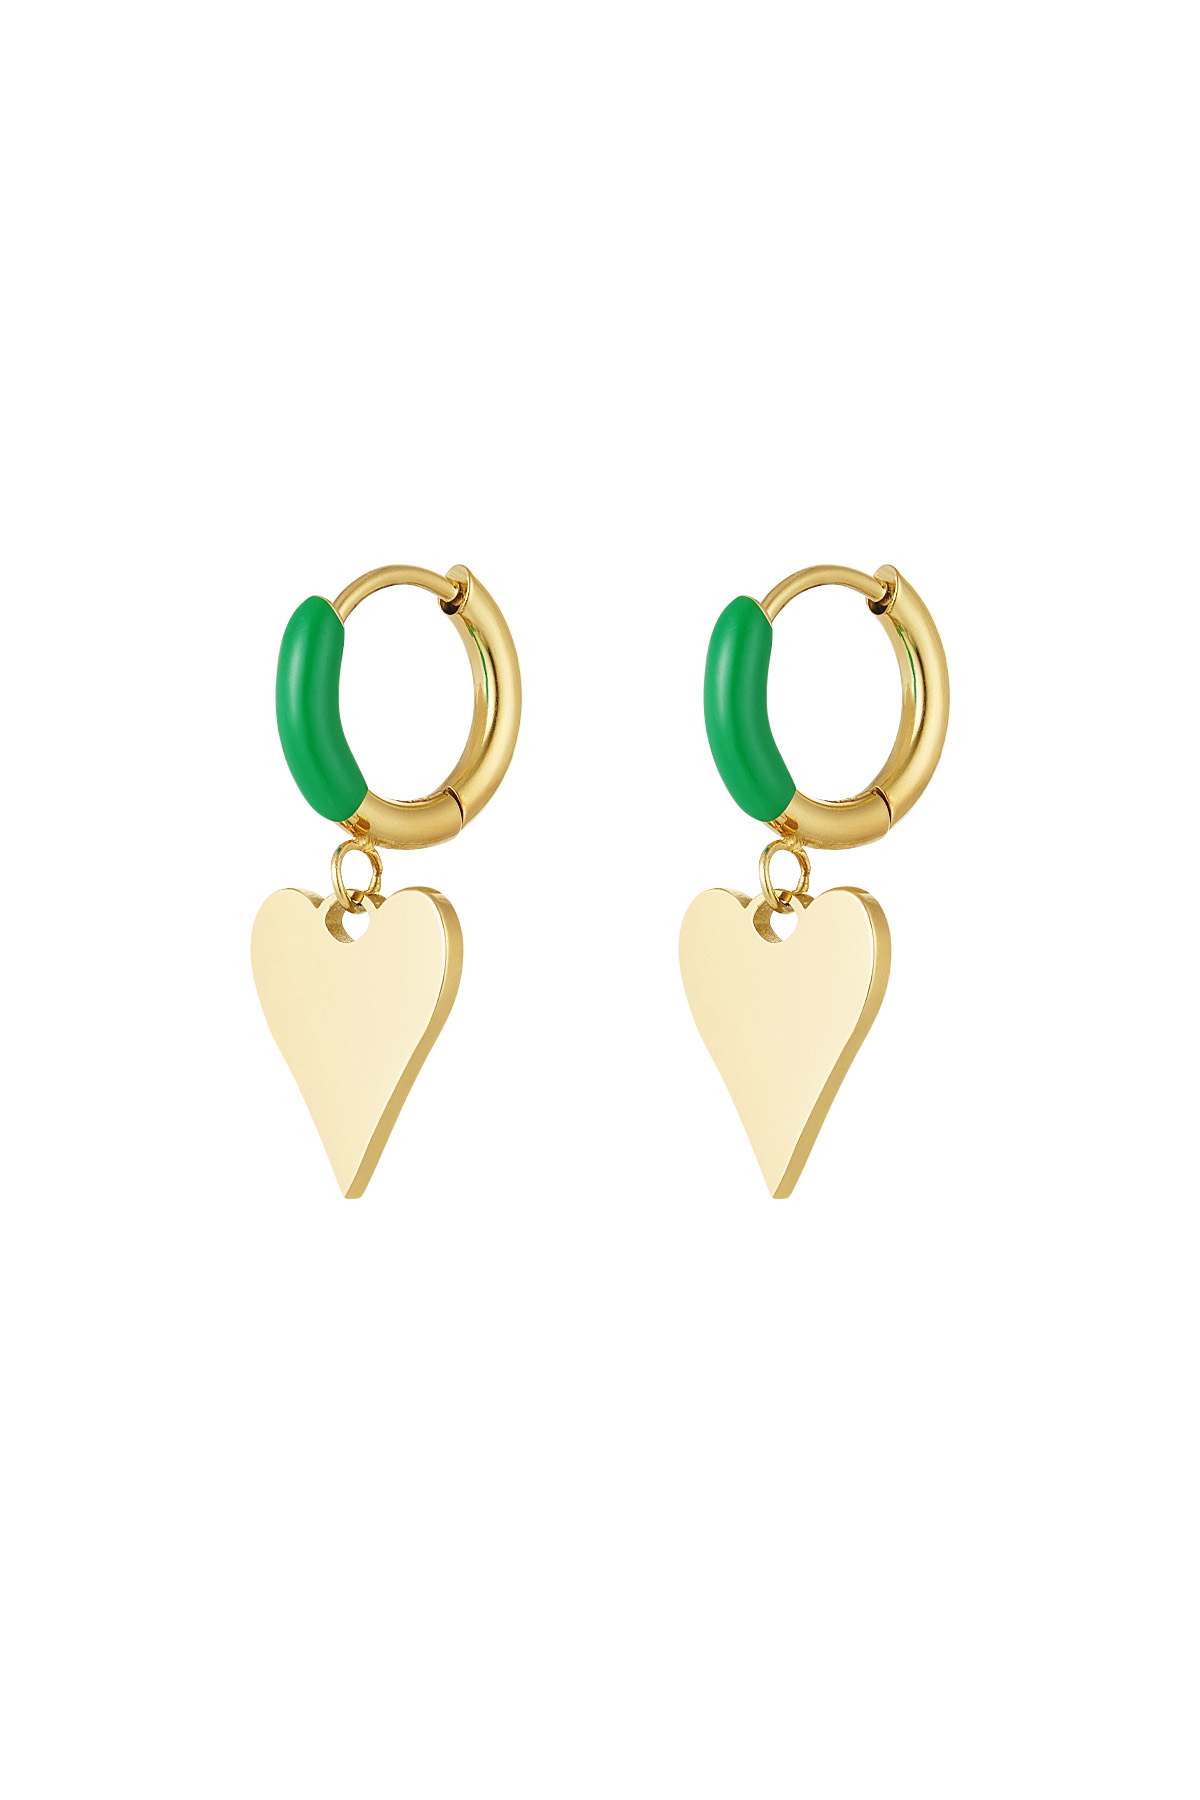 Ohrringe buntes Herz - gold/grün 